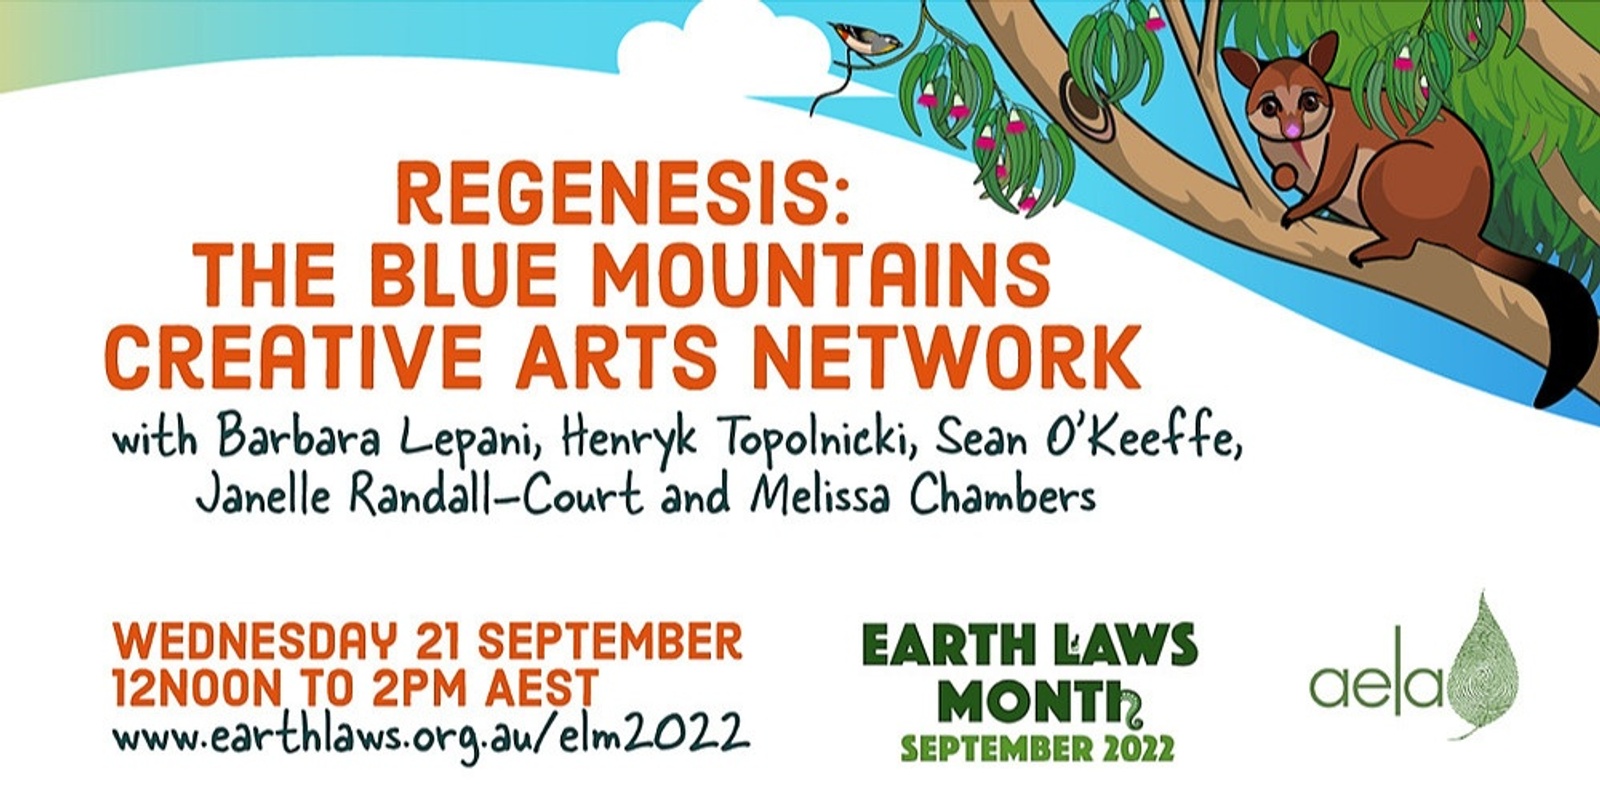 Regenesis: The Blue Mountains Creative Arts Network